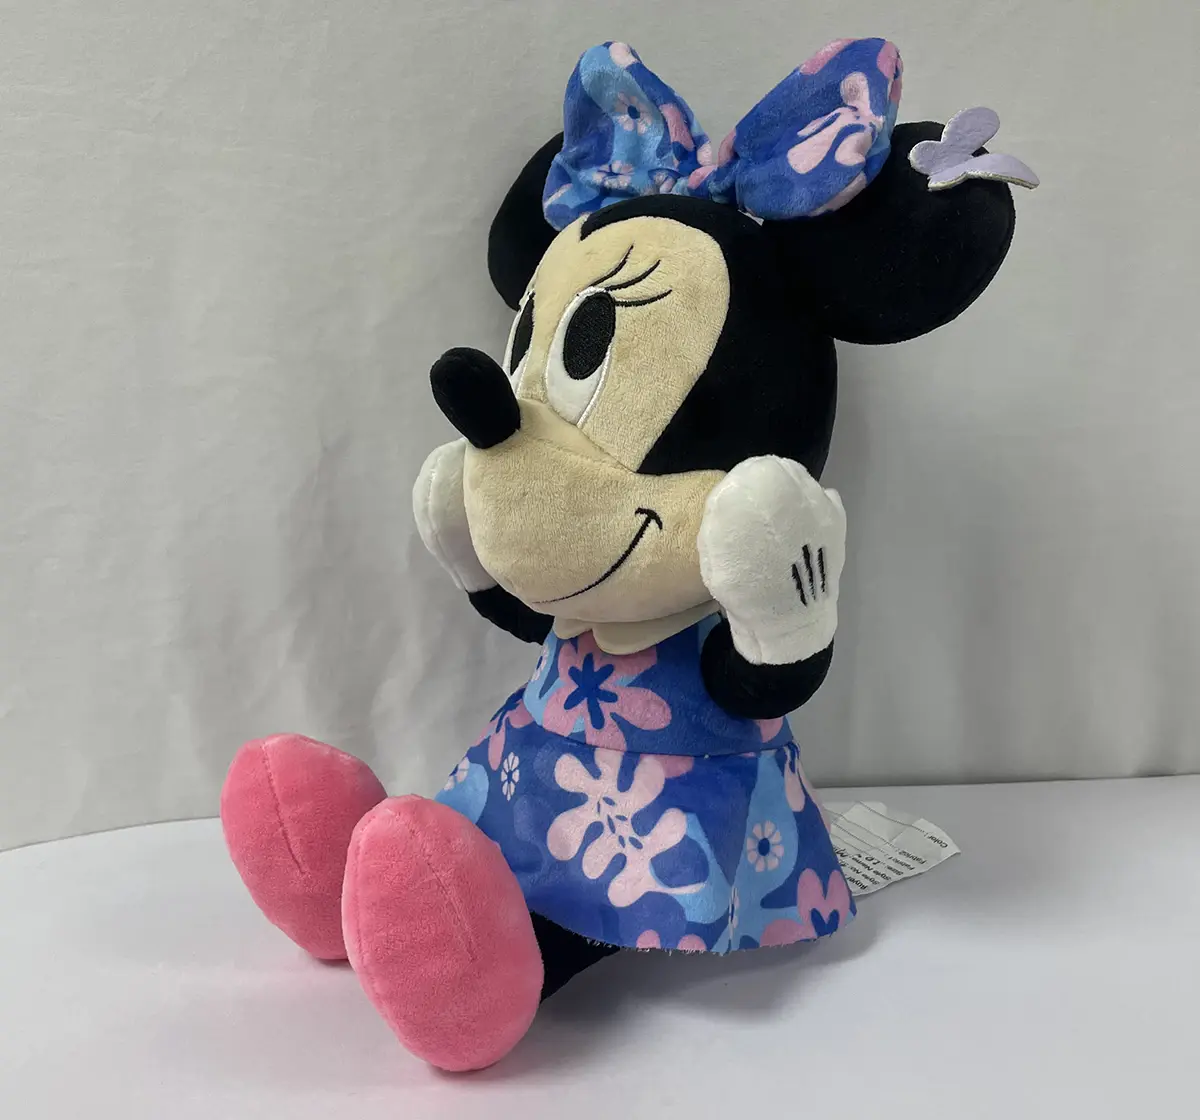 Disney Minnie Mouse Multicolour Plush Soft Toys For Girls & Boys, 2 Yrs+, 10 Inch